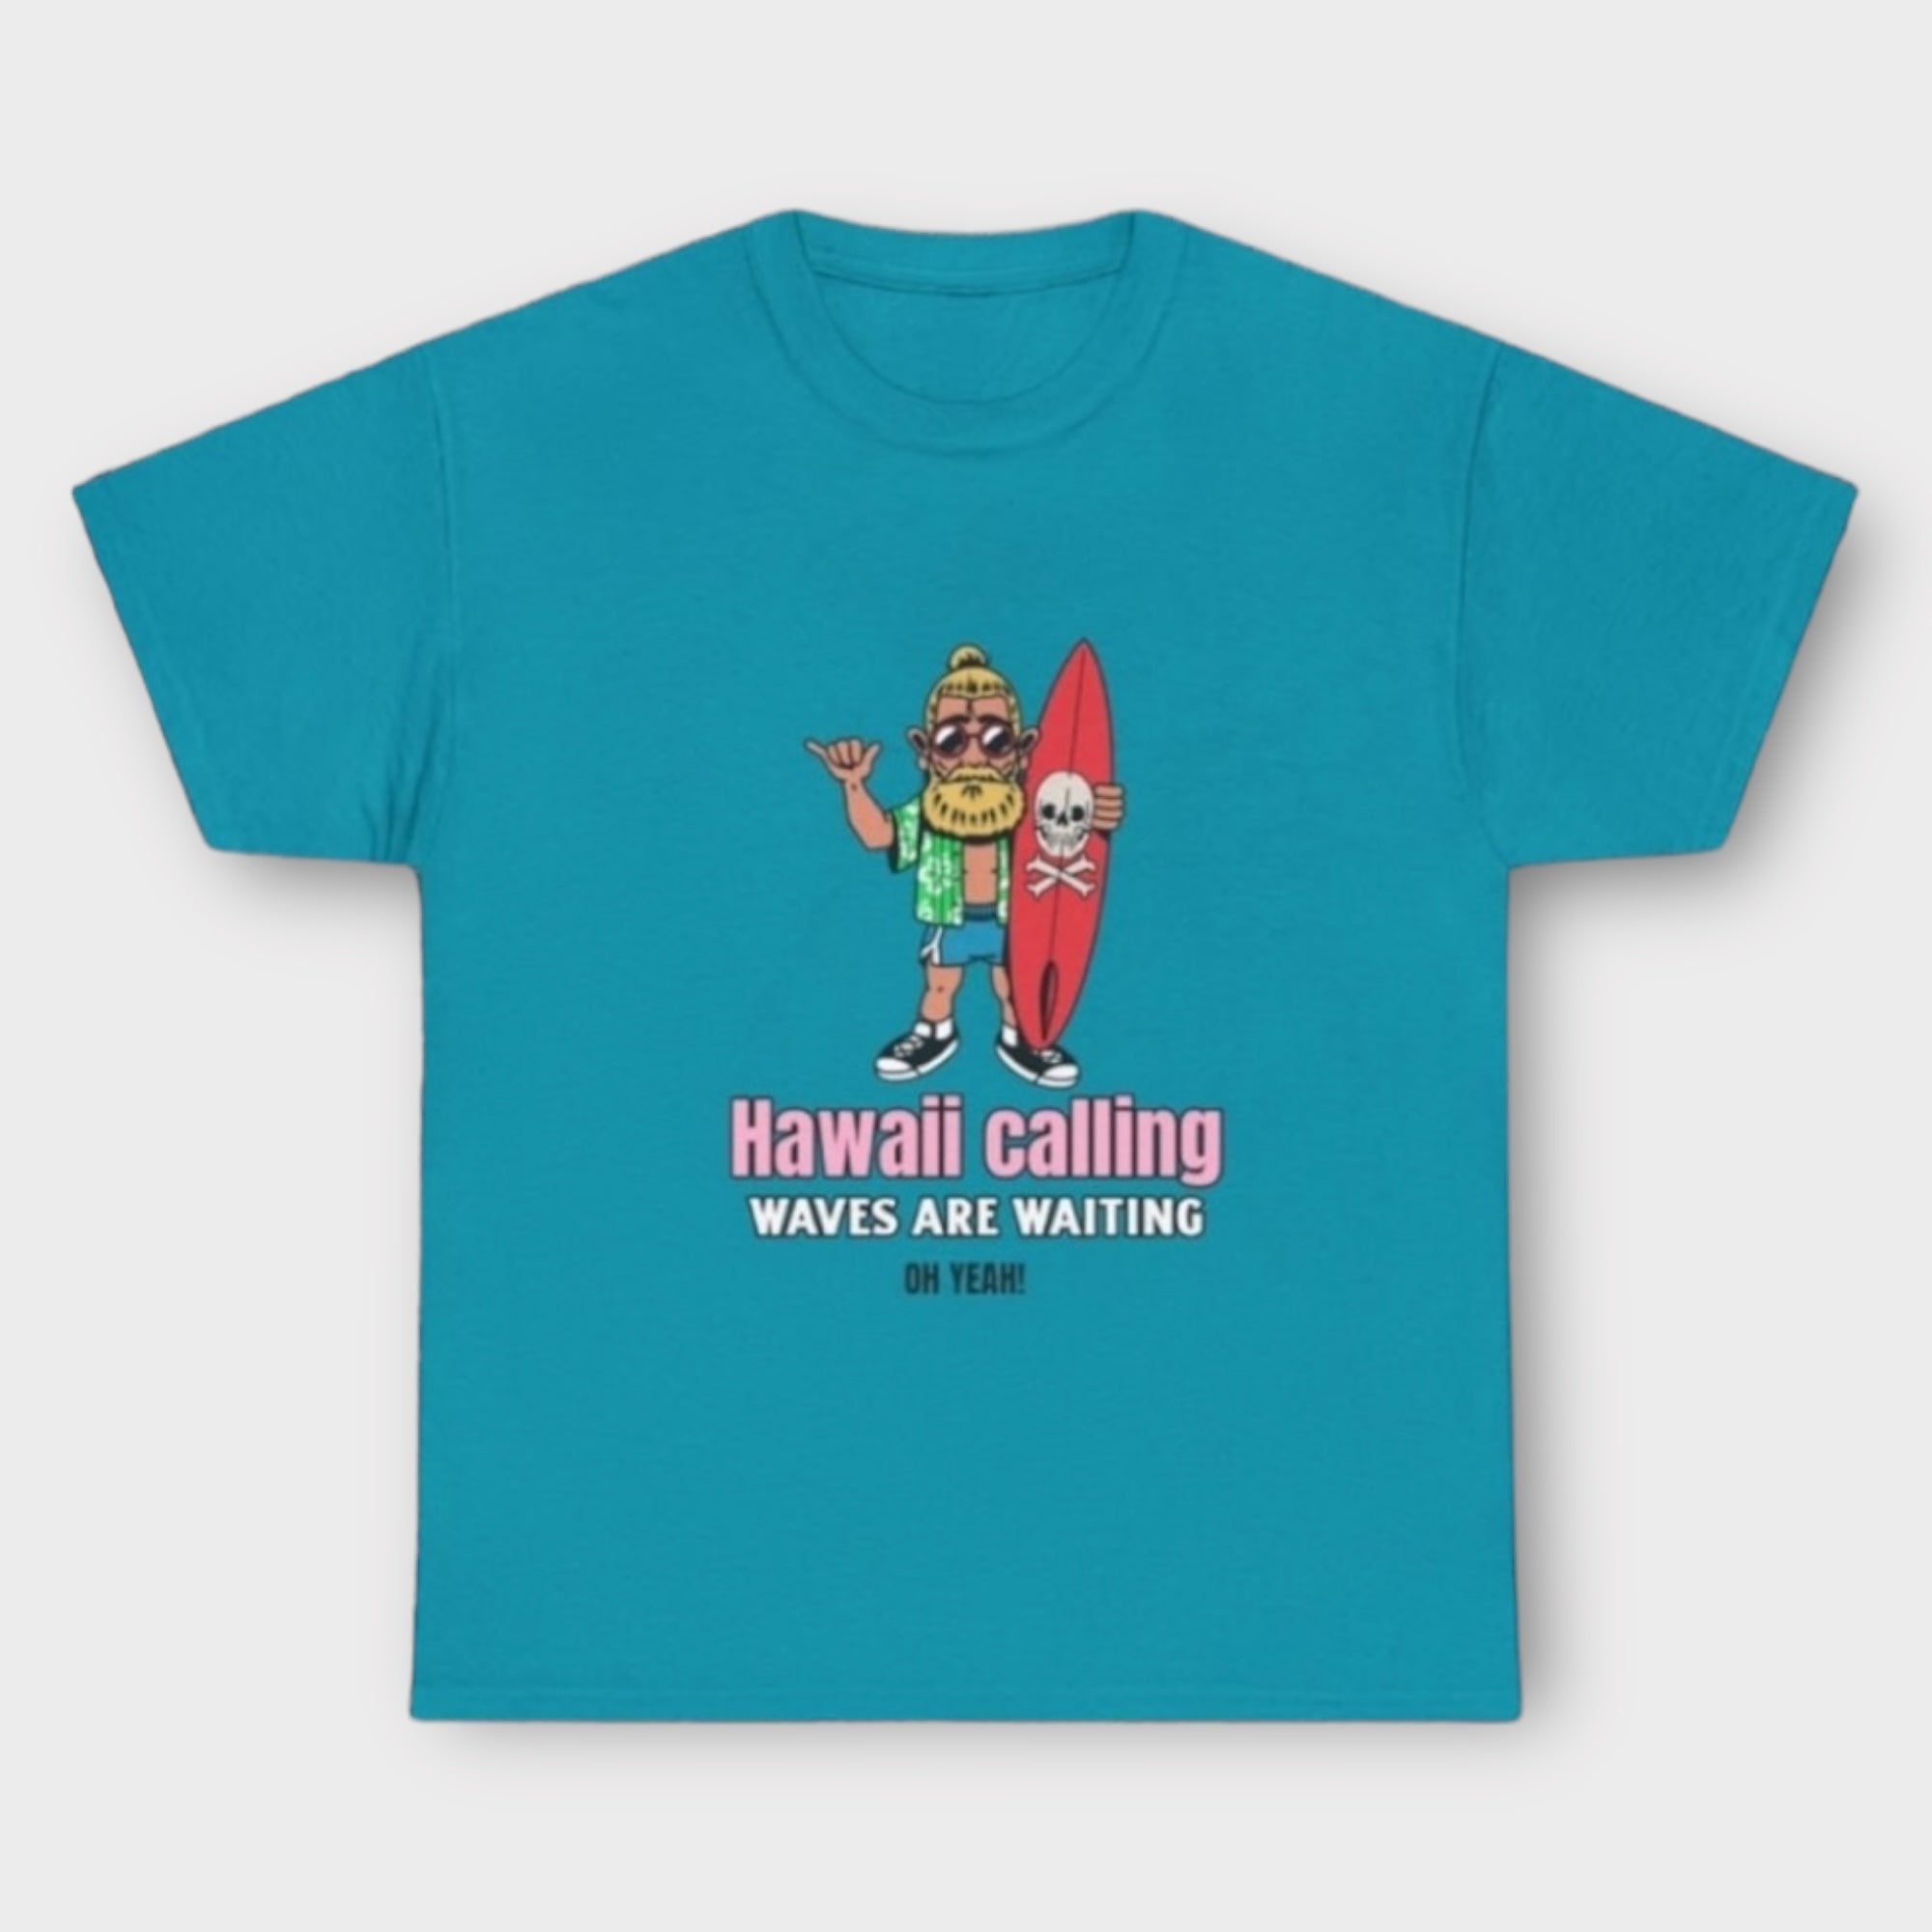 'AKOL' Hawaii calling shirt for men and women